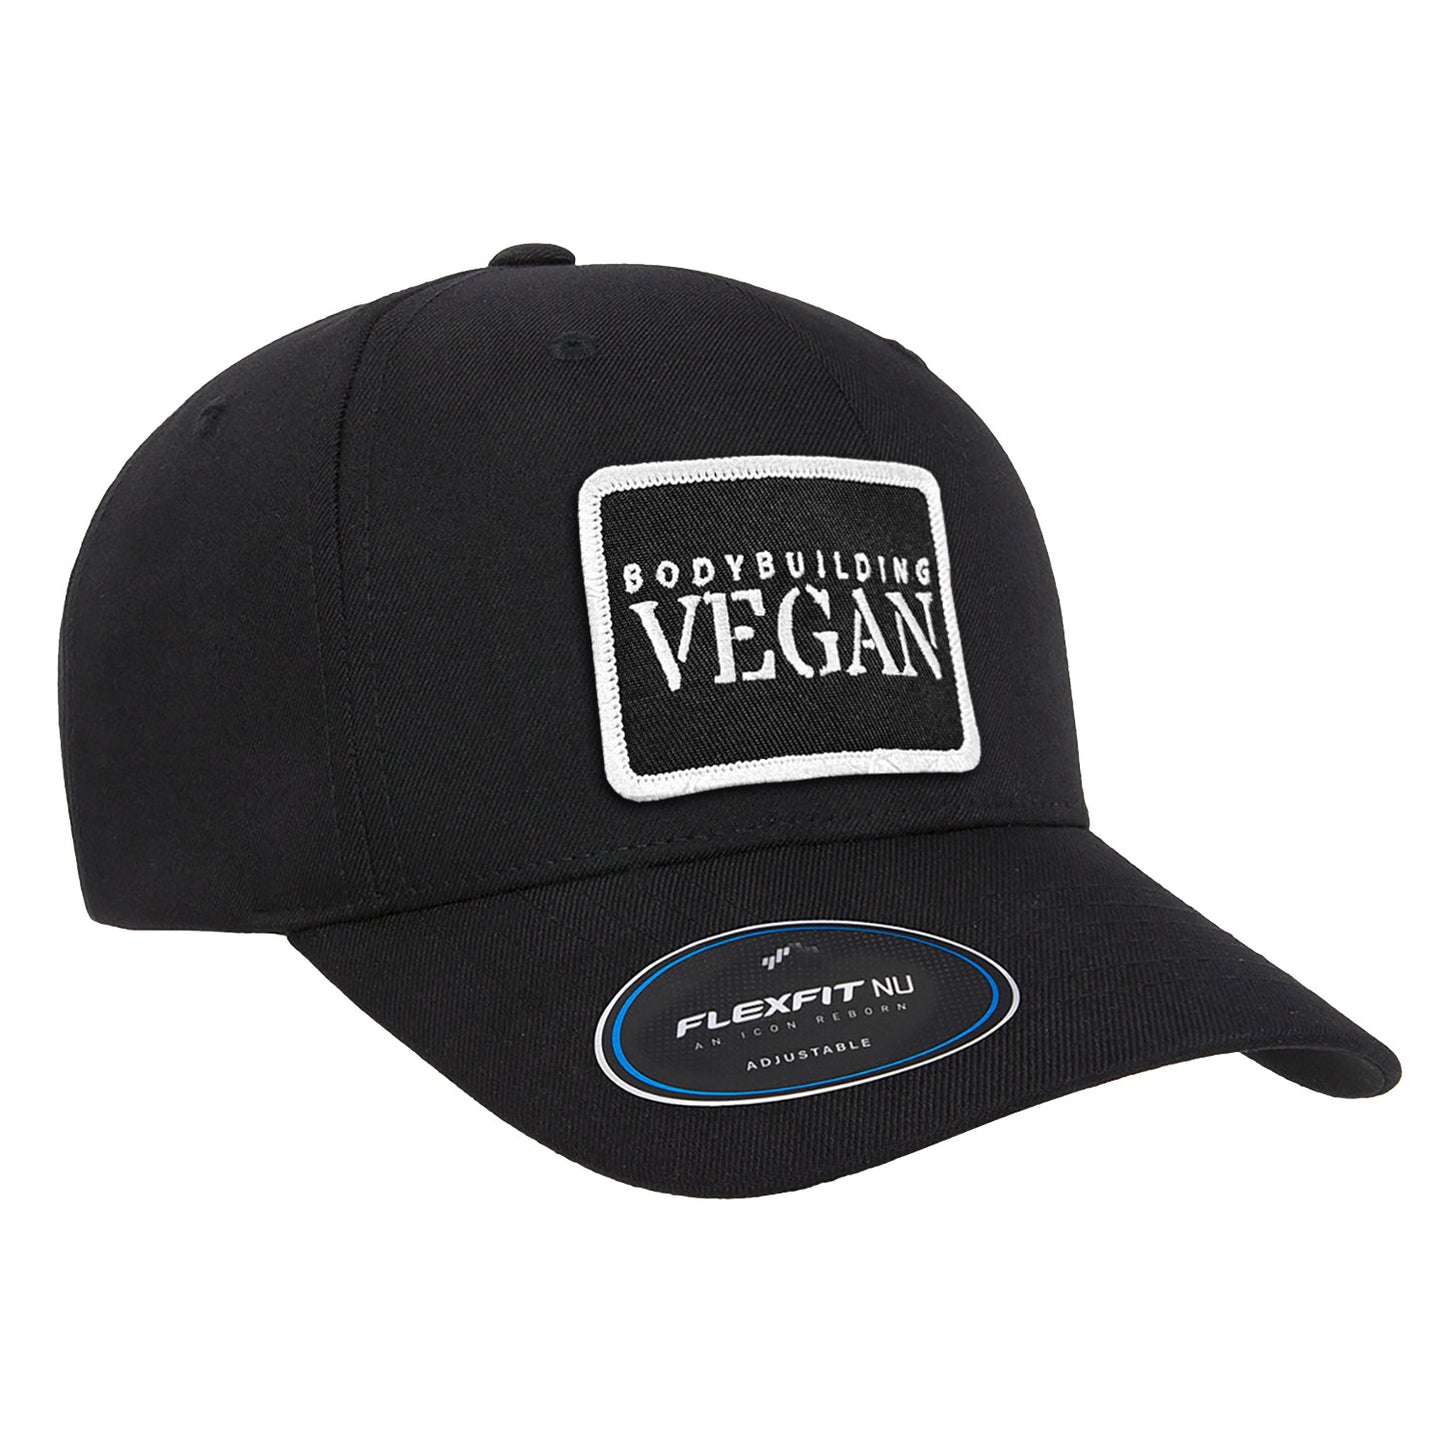 Bodybuilding Vegan Flexifit Snap-Back Hat - Available in 5 Colors